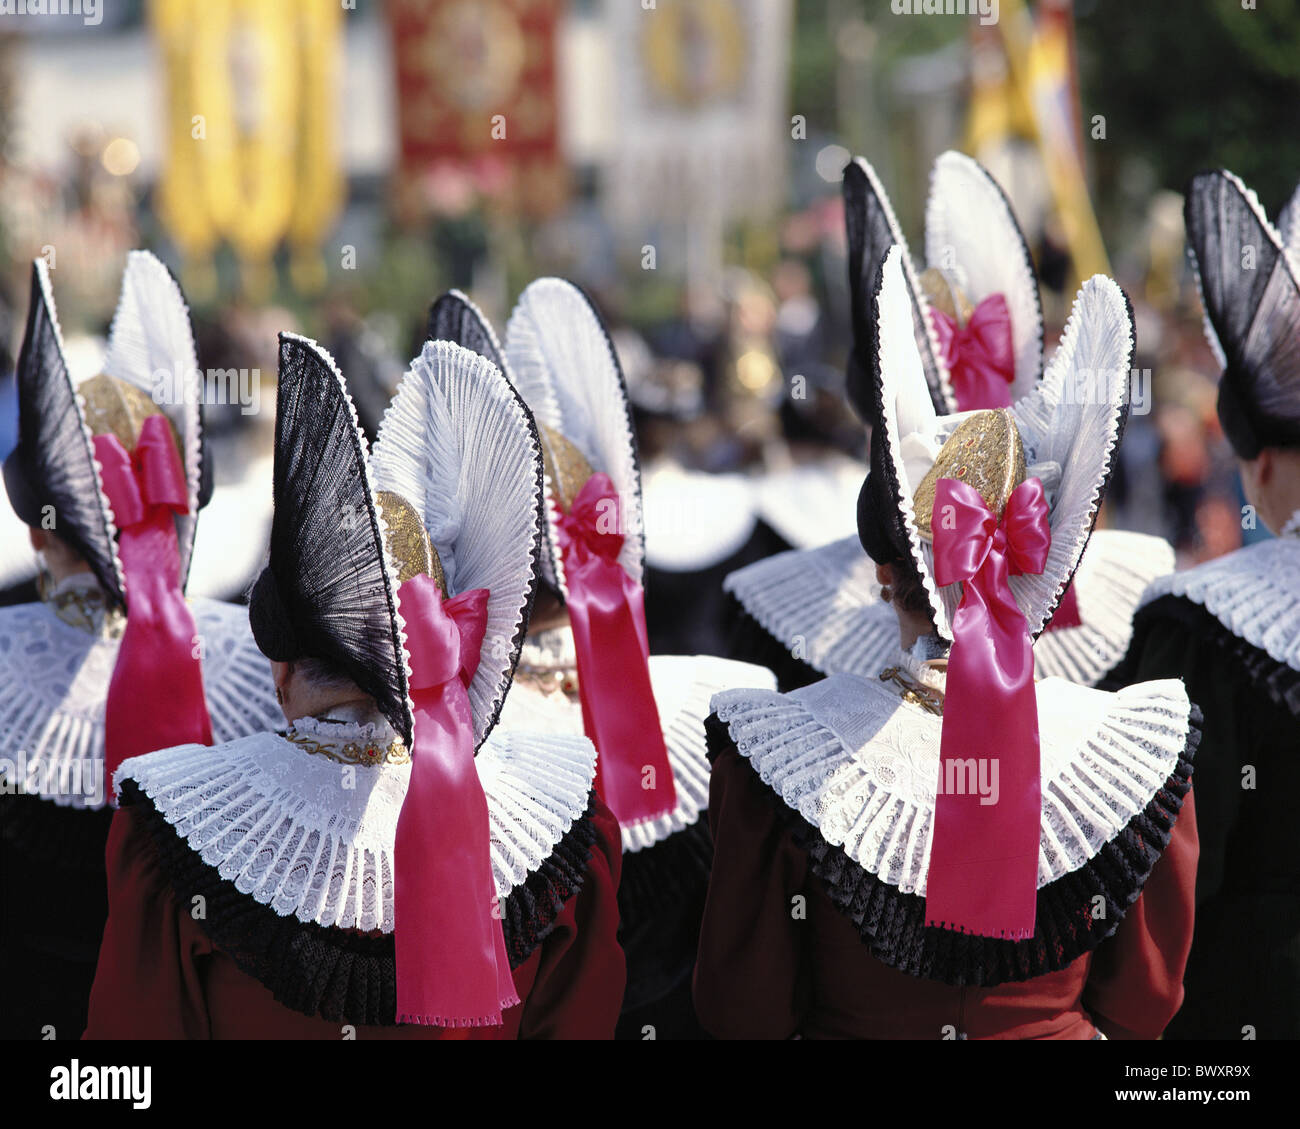 women Corpus Christi headdress procession religion St. Gallen Switzerland Europe national costumes from ba Stock Photo